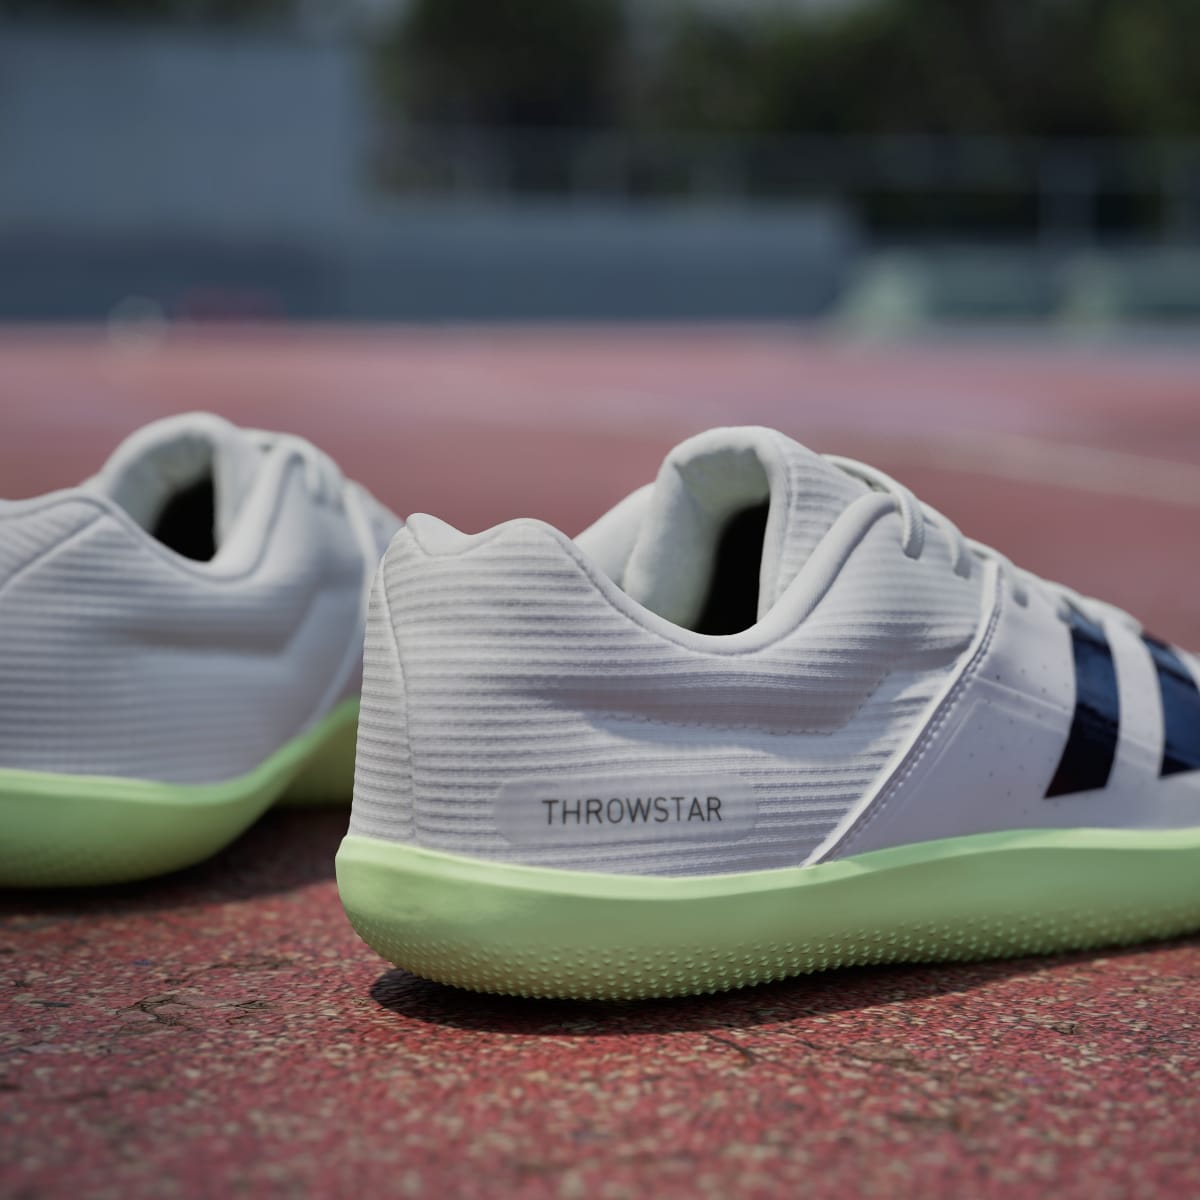 Adidas Scarpe da atletica Throwstar. 9